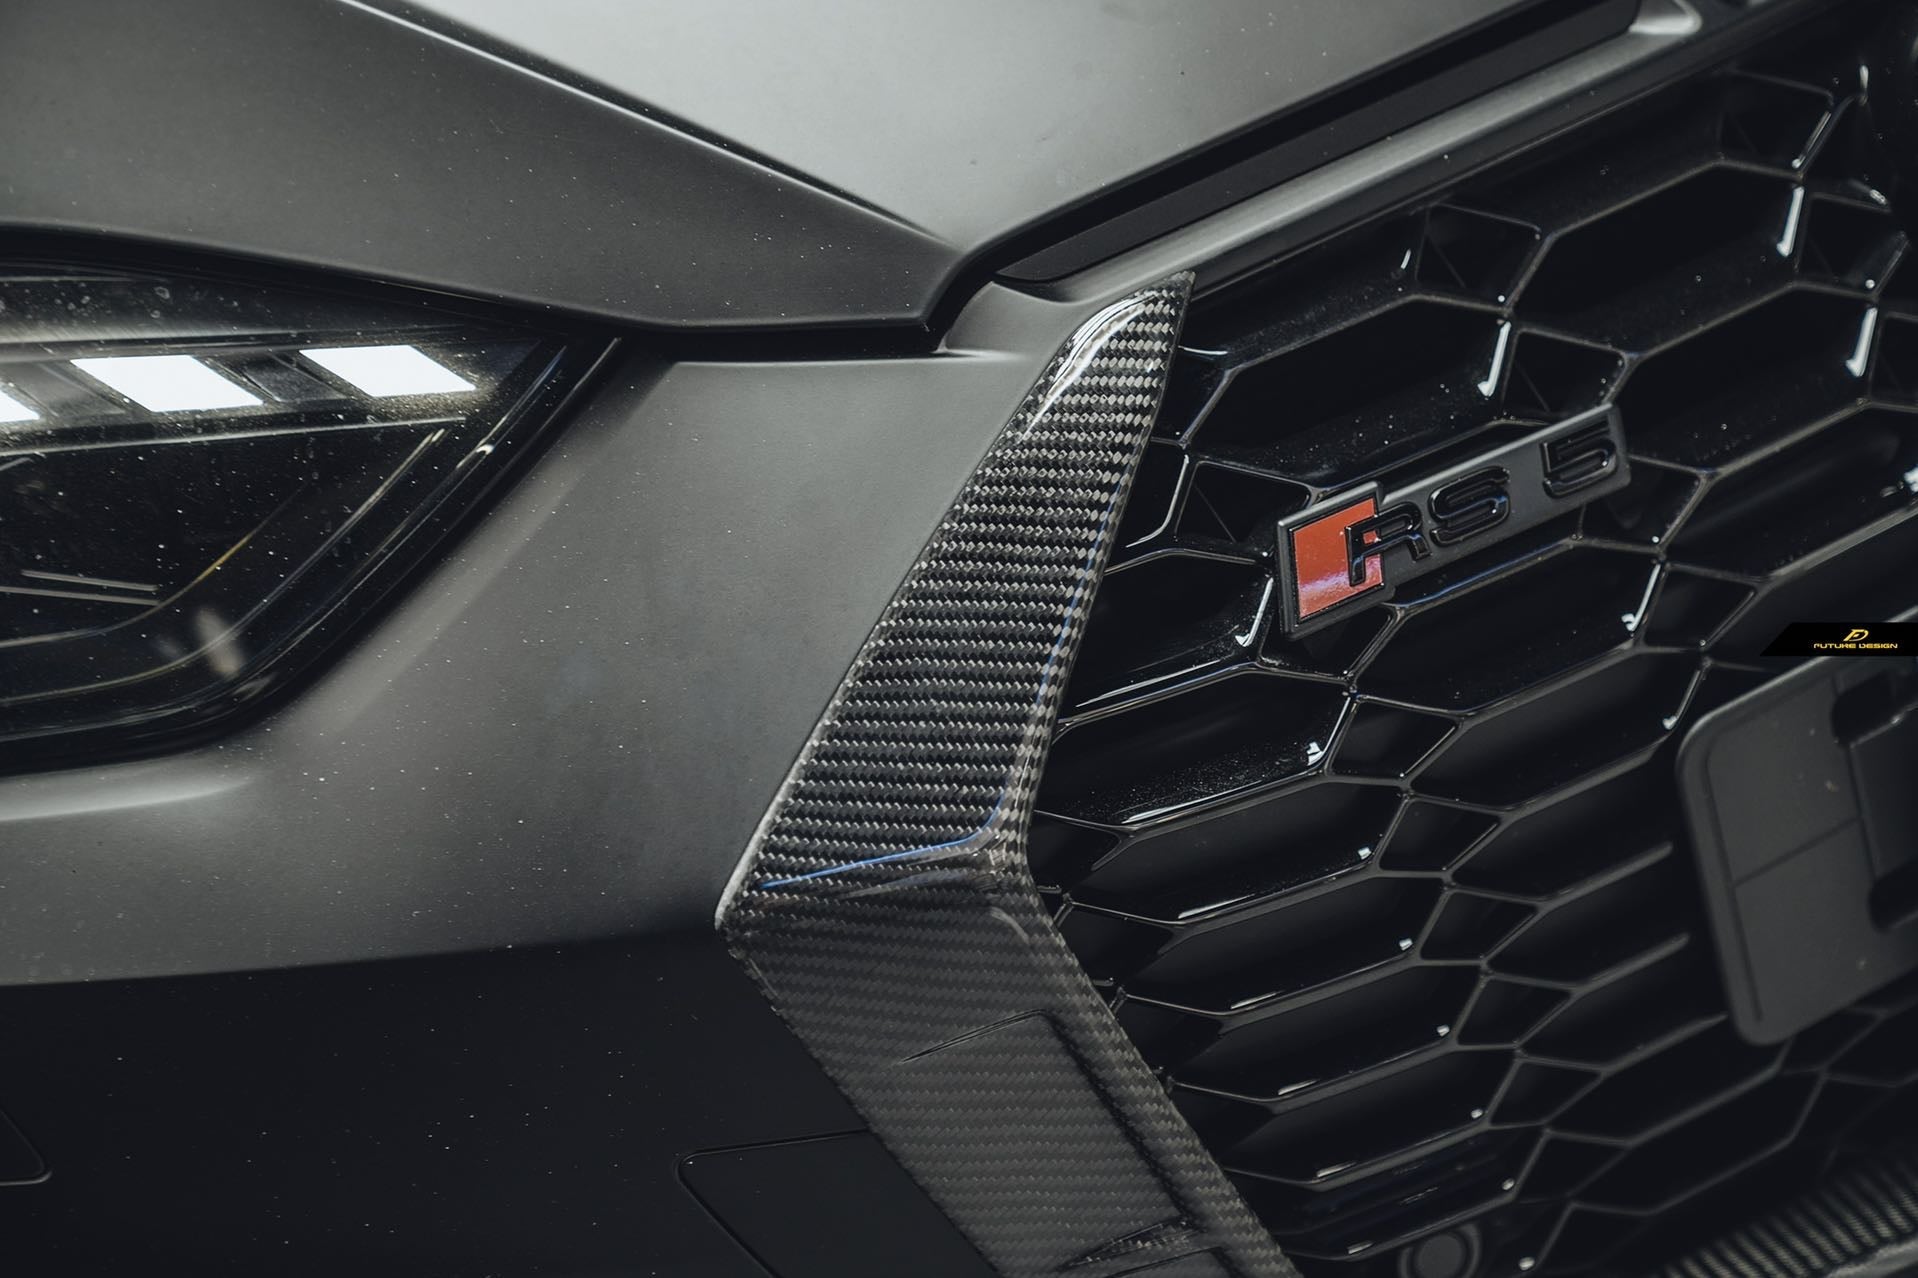 Future Design Carbon Fiber FRONT GRILL SIDE OVERLAY TRIM - "Blaze kit" for Audi RS5 B9.5 2020+